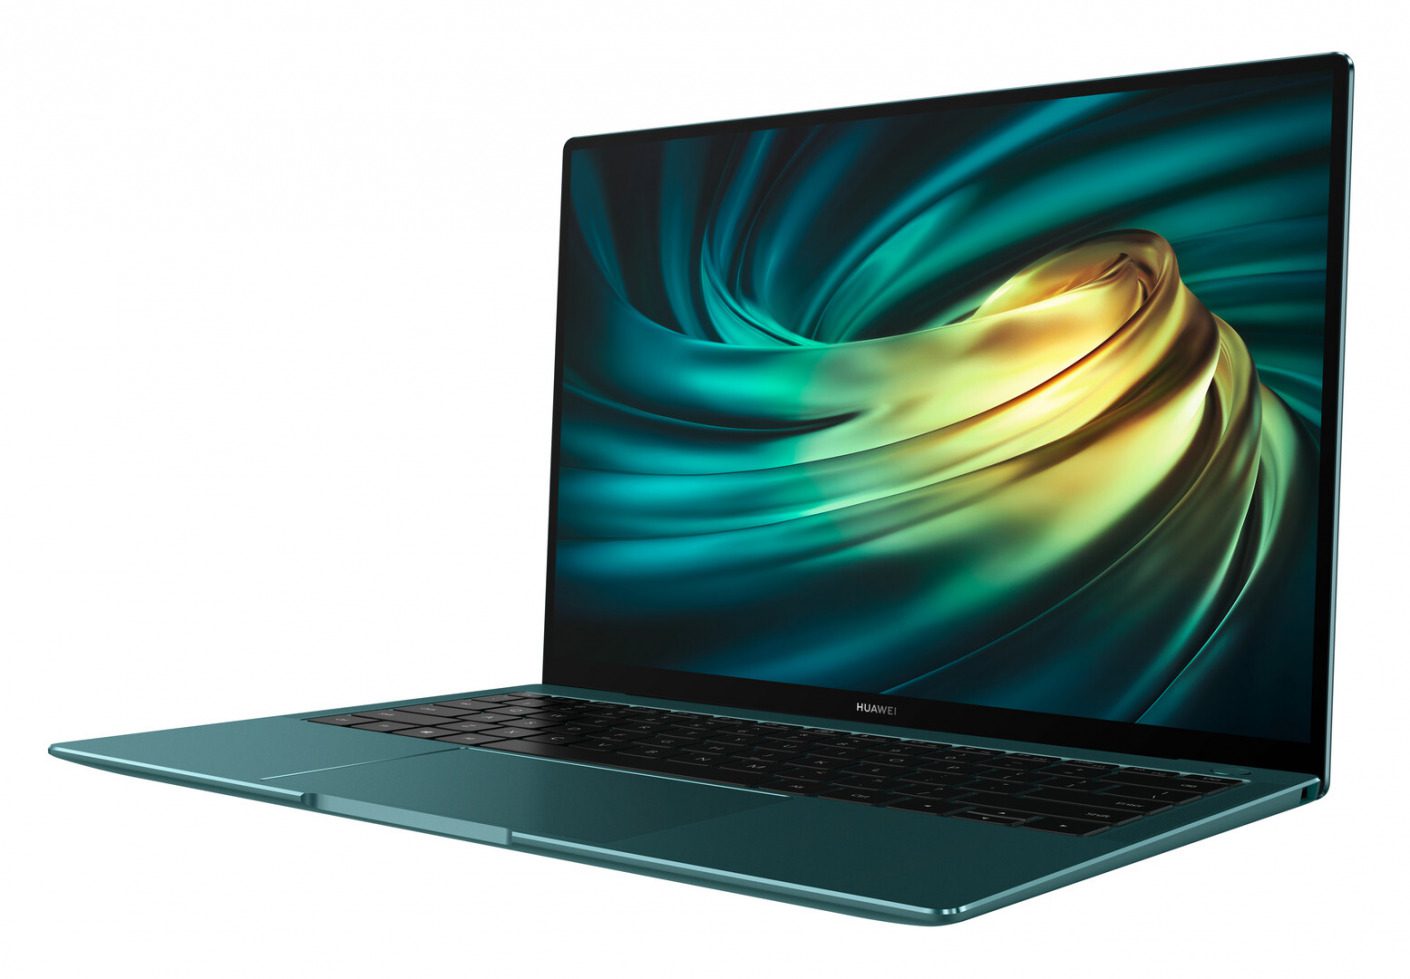 Cek Harga Dan Spesifikasi Laptop Huawei Matebook X Pro Resmi My XXX